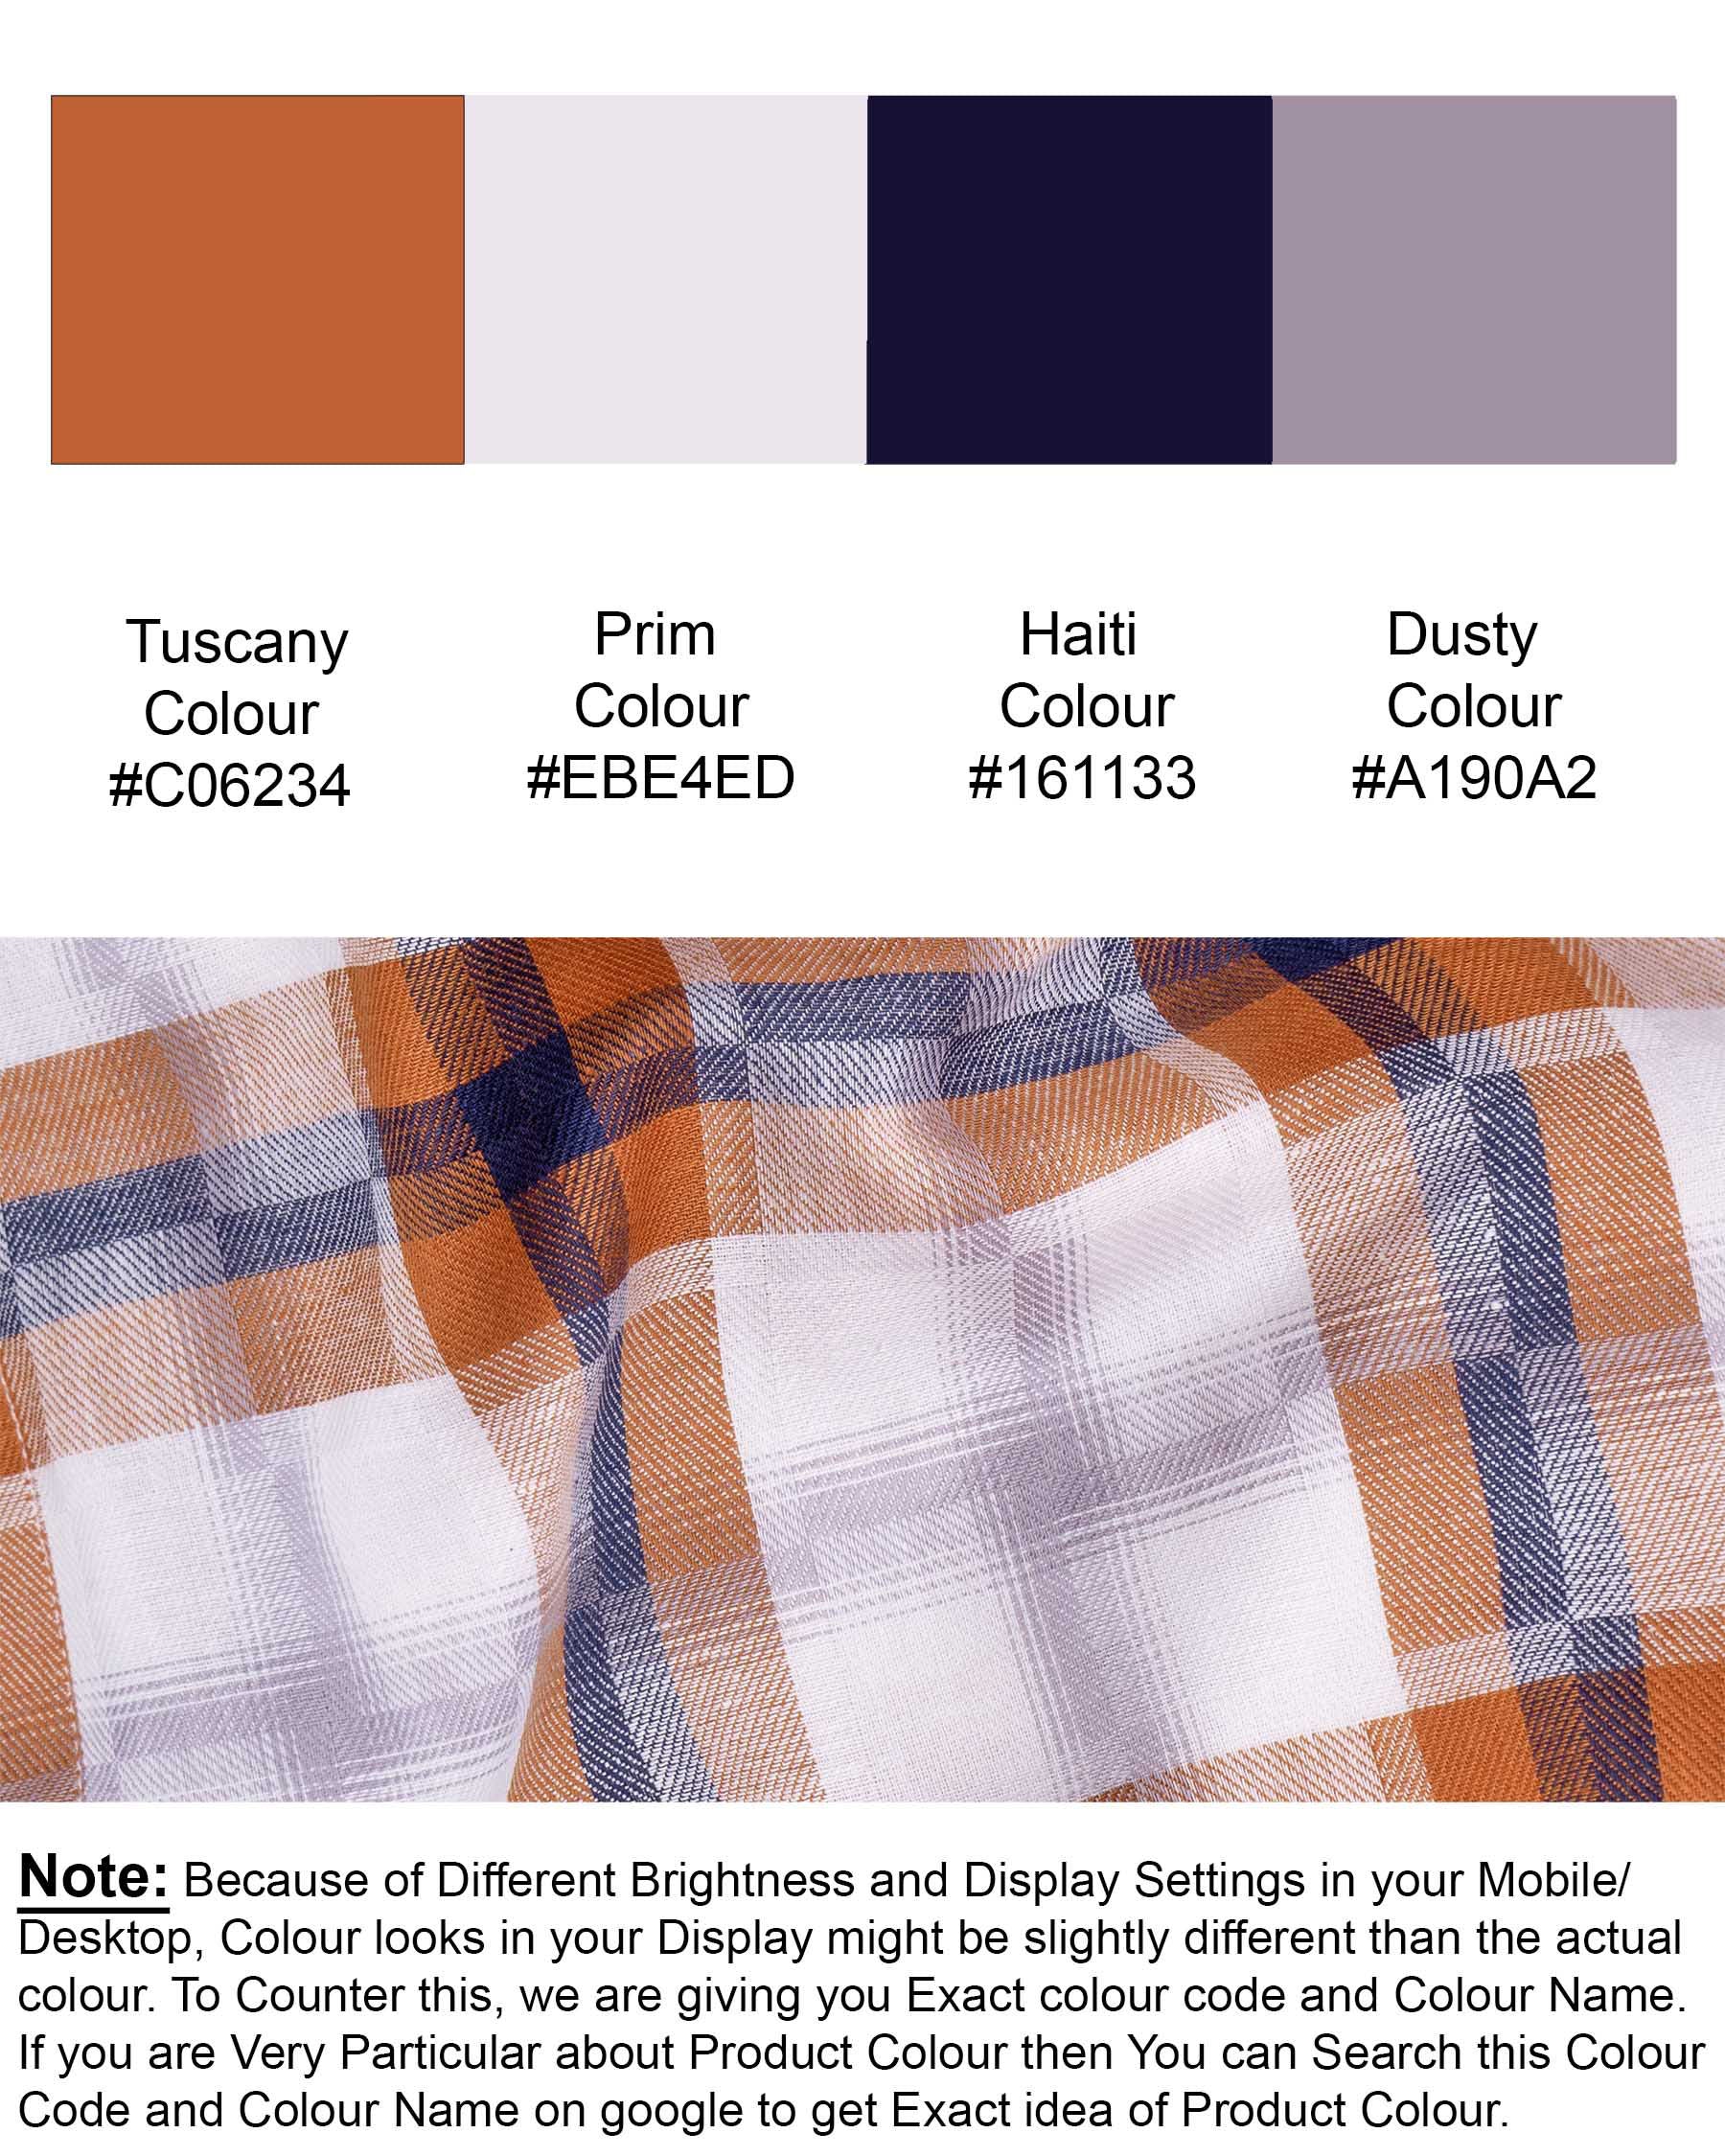 Tuscany Orange Twill Multicolour Checkered Premium Cotton Shirt 6284-CA-BLE-38, 6284-CA-BLE-H-38, 6284-CA-BLE-39, 6284-CA-BLE-H-39, 6284-CA-BLE-40, 6284-CA-BLE-H-40, 6284-CA-BLE-42, 6284-CA-BLE-H-42, 6284-CA-BLE-44, 6284-CA-BLE-H-44, 6284-CA-BLE-46, 6284-CA-BLE-H-46, 6284-CA-BLE-48, 6284-CA-BLE-H-48, 6284-CA-BLE-50, 6284-CA-BLE-H-50, 6284-CA-BLE-52, 6284-CA-BLE-H-52